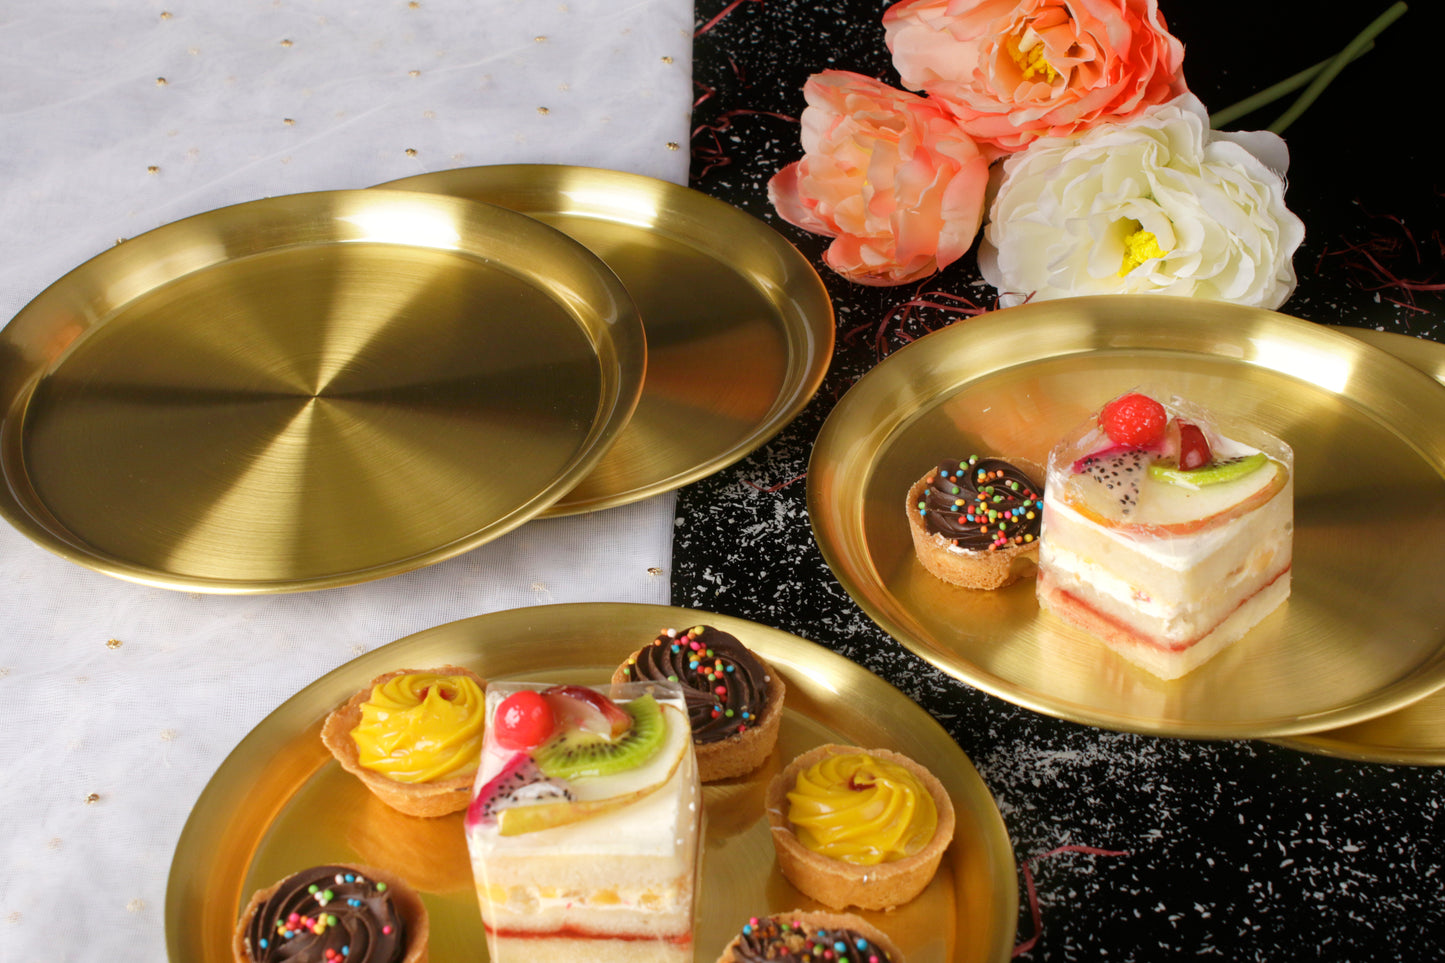 Paramparagat Upyogita Swarna Devyani 7" Brass Dessert Plates